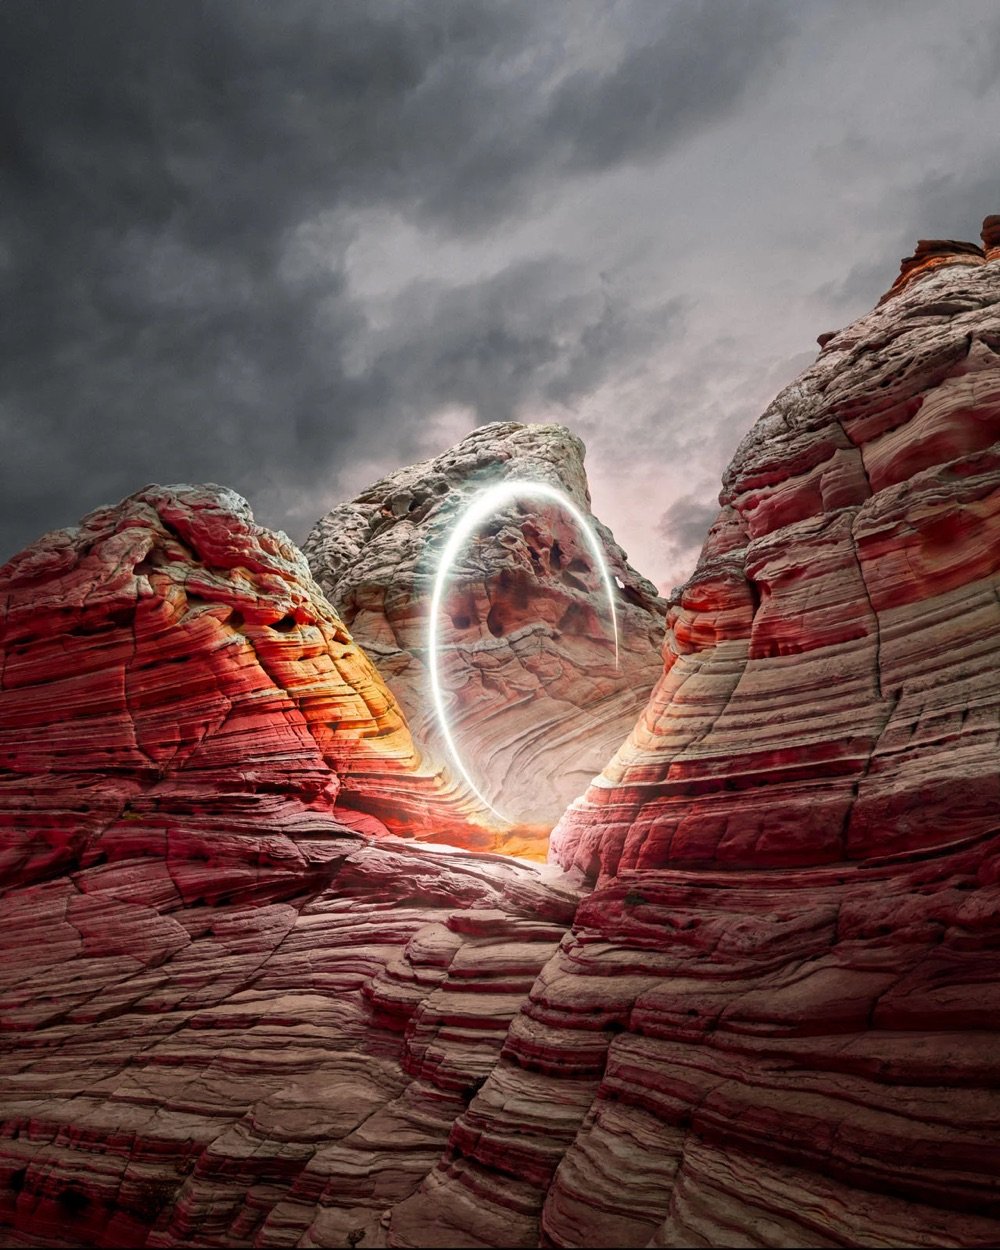 a disk of light illuminates a layered desert landscape